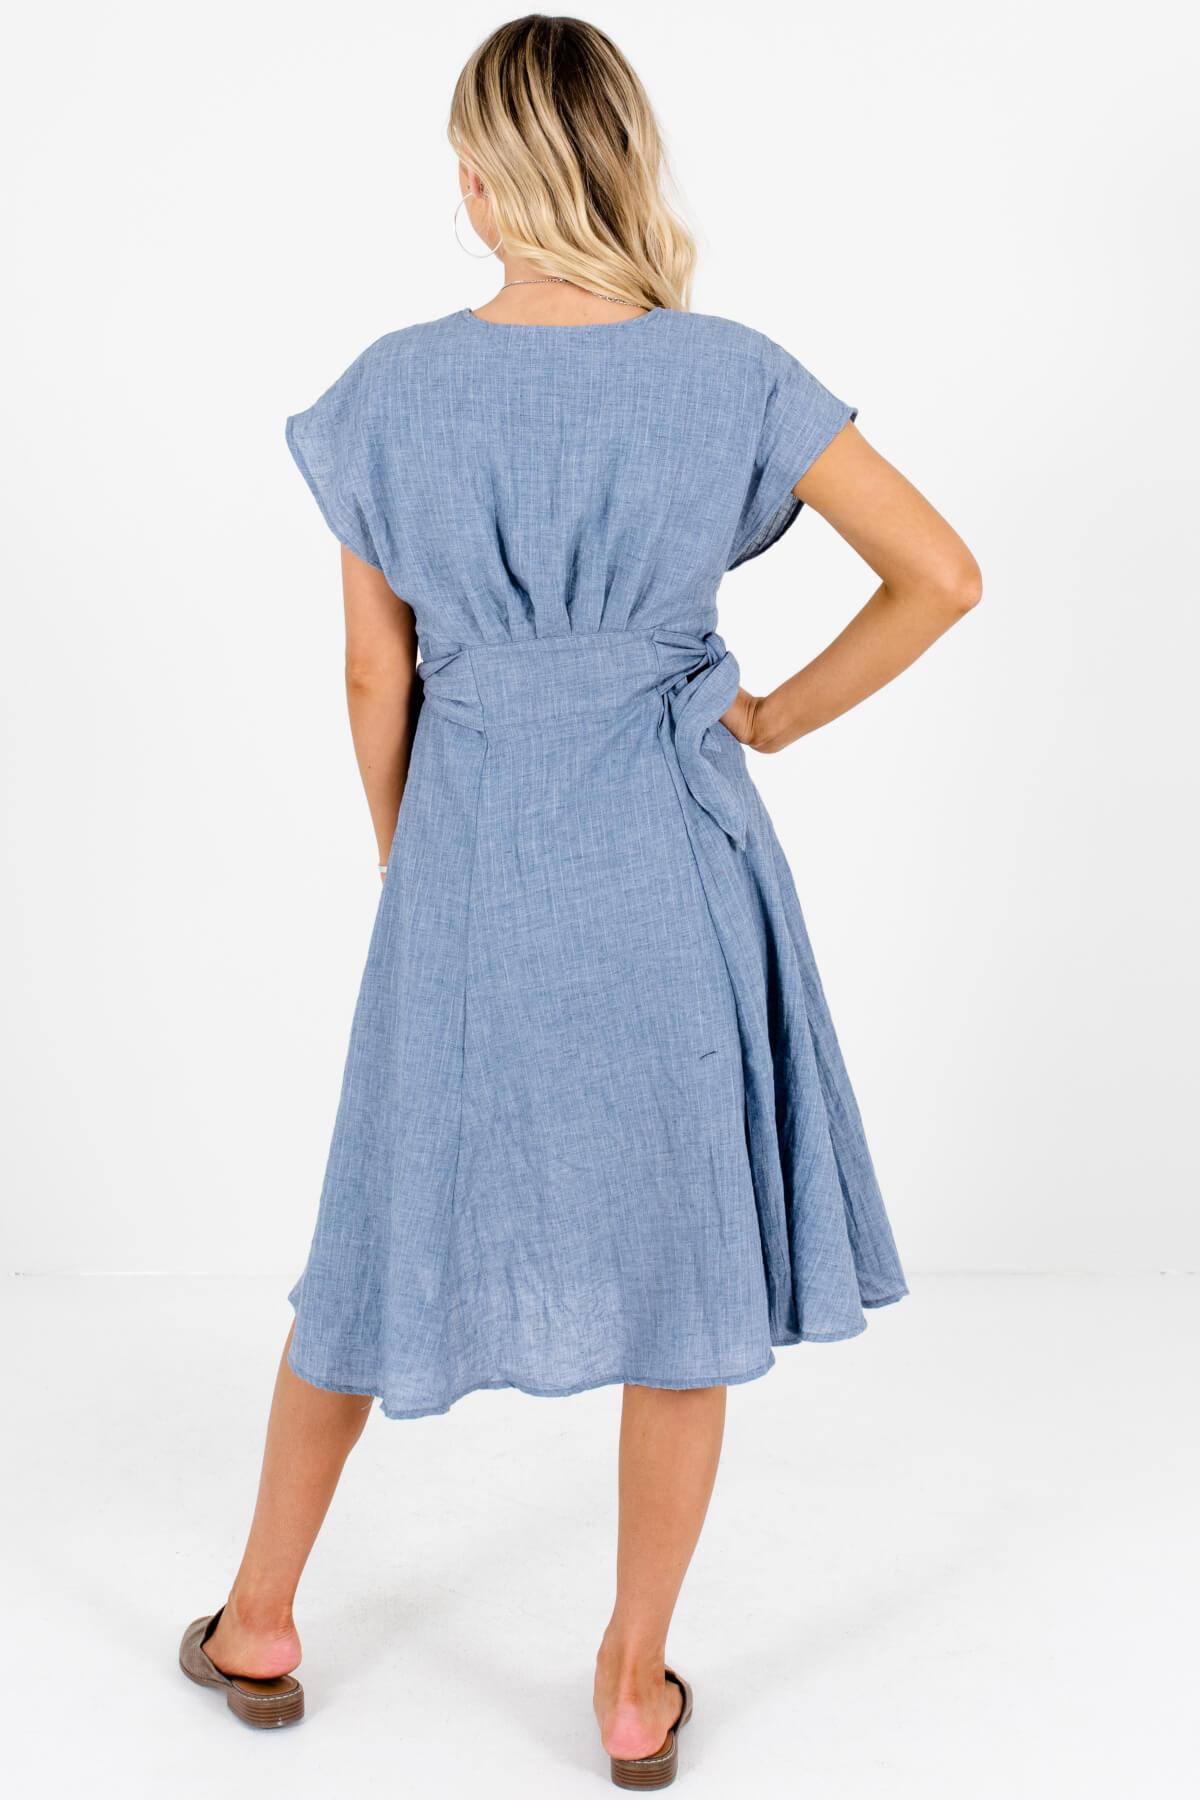 Blue Button-Up Side-Tie Midi Dresses Affordable Online Boutique